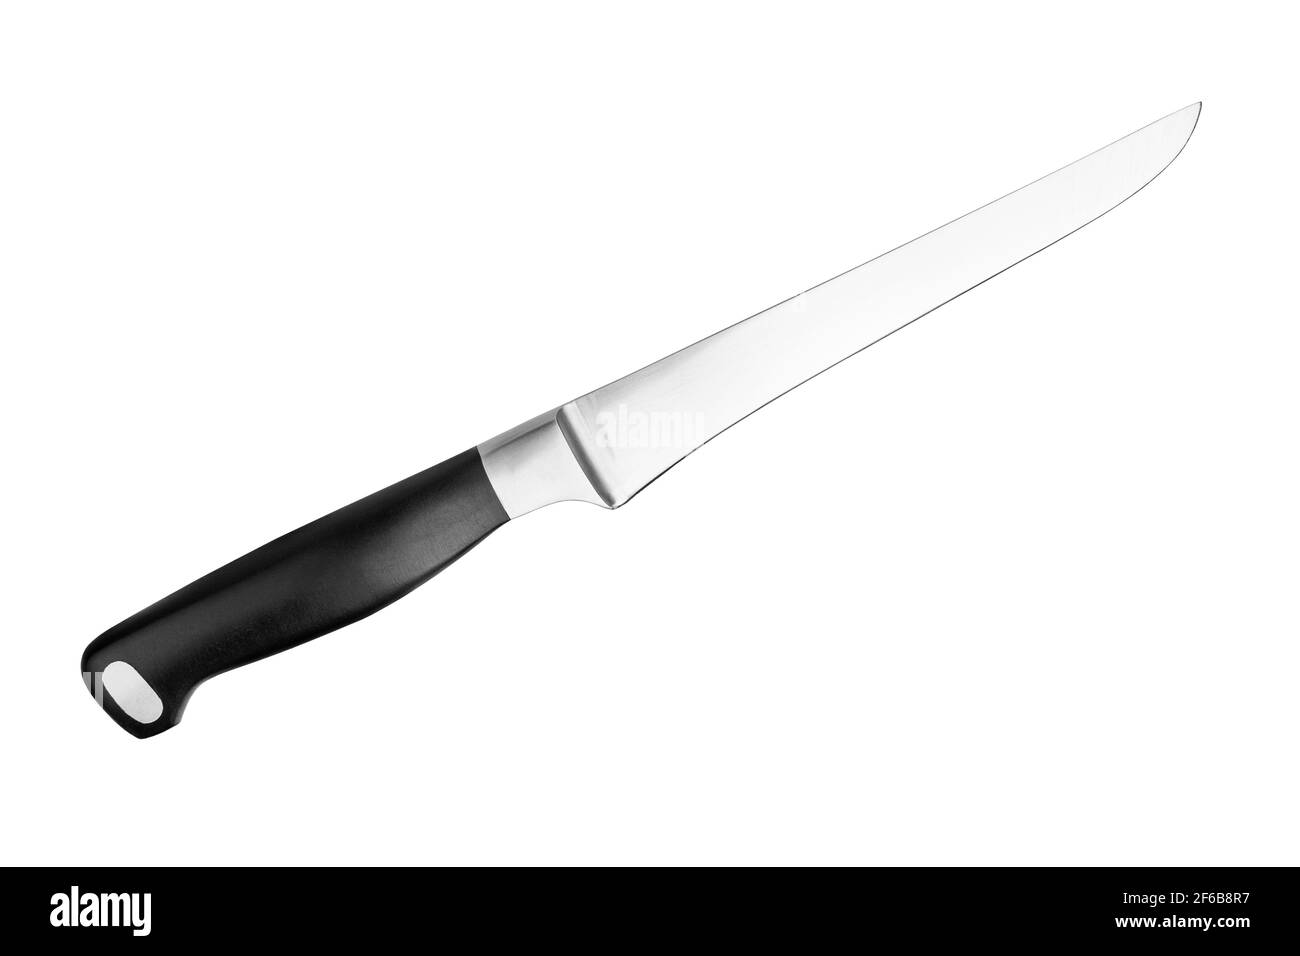 SHAN ZU Boning Knife Stainless Steel Butcher Knife Meat Cleaver